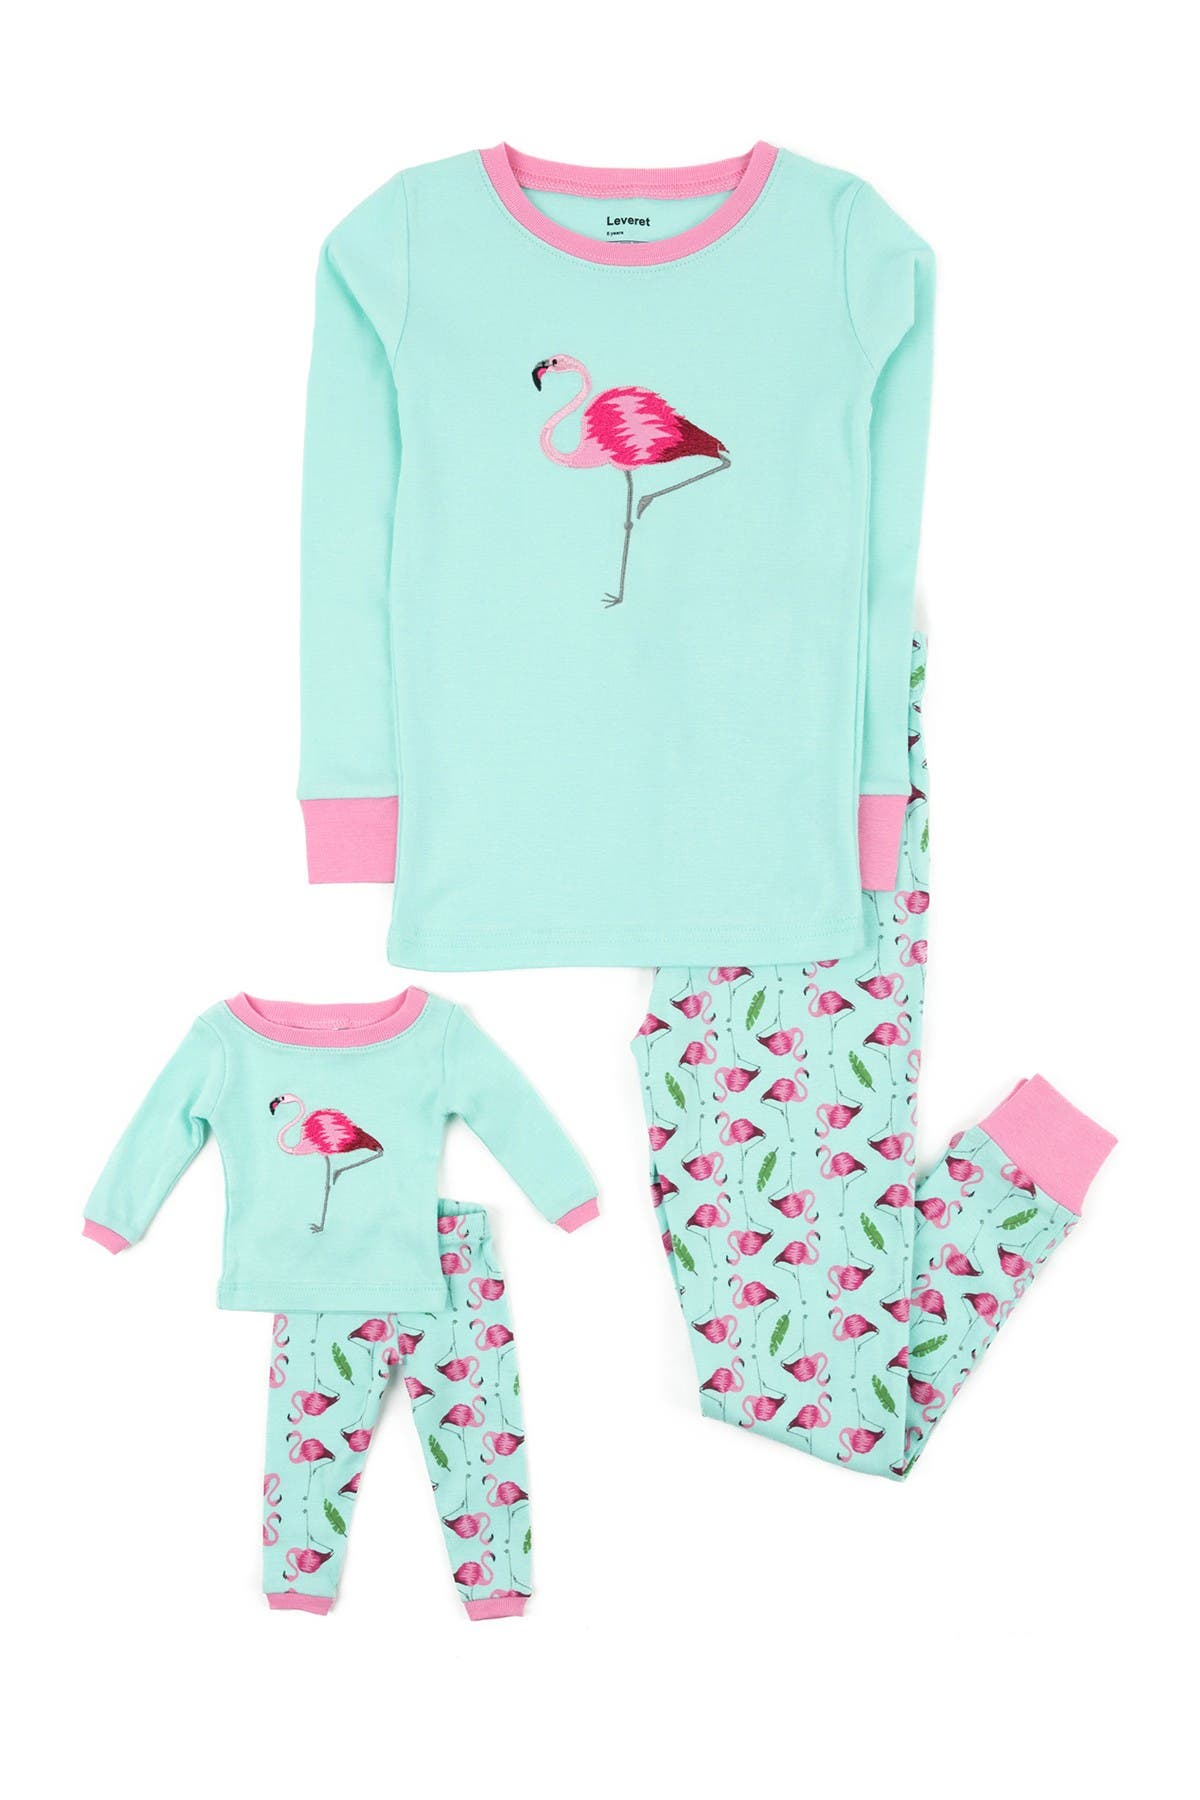 matching baby doll and girl pajamas